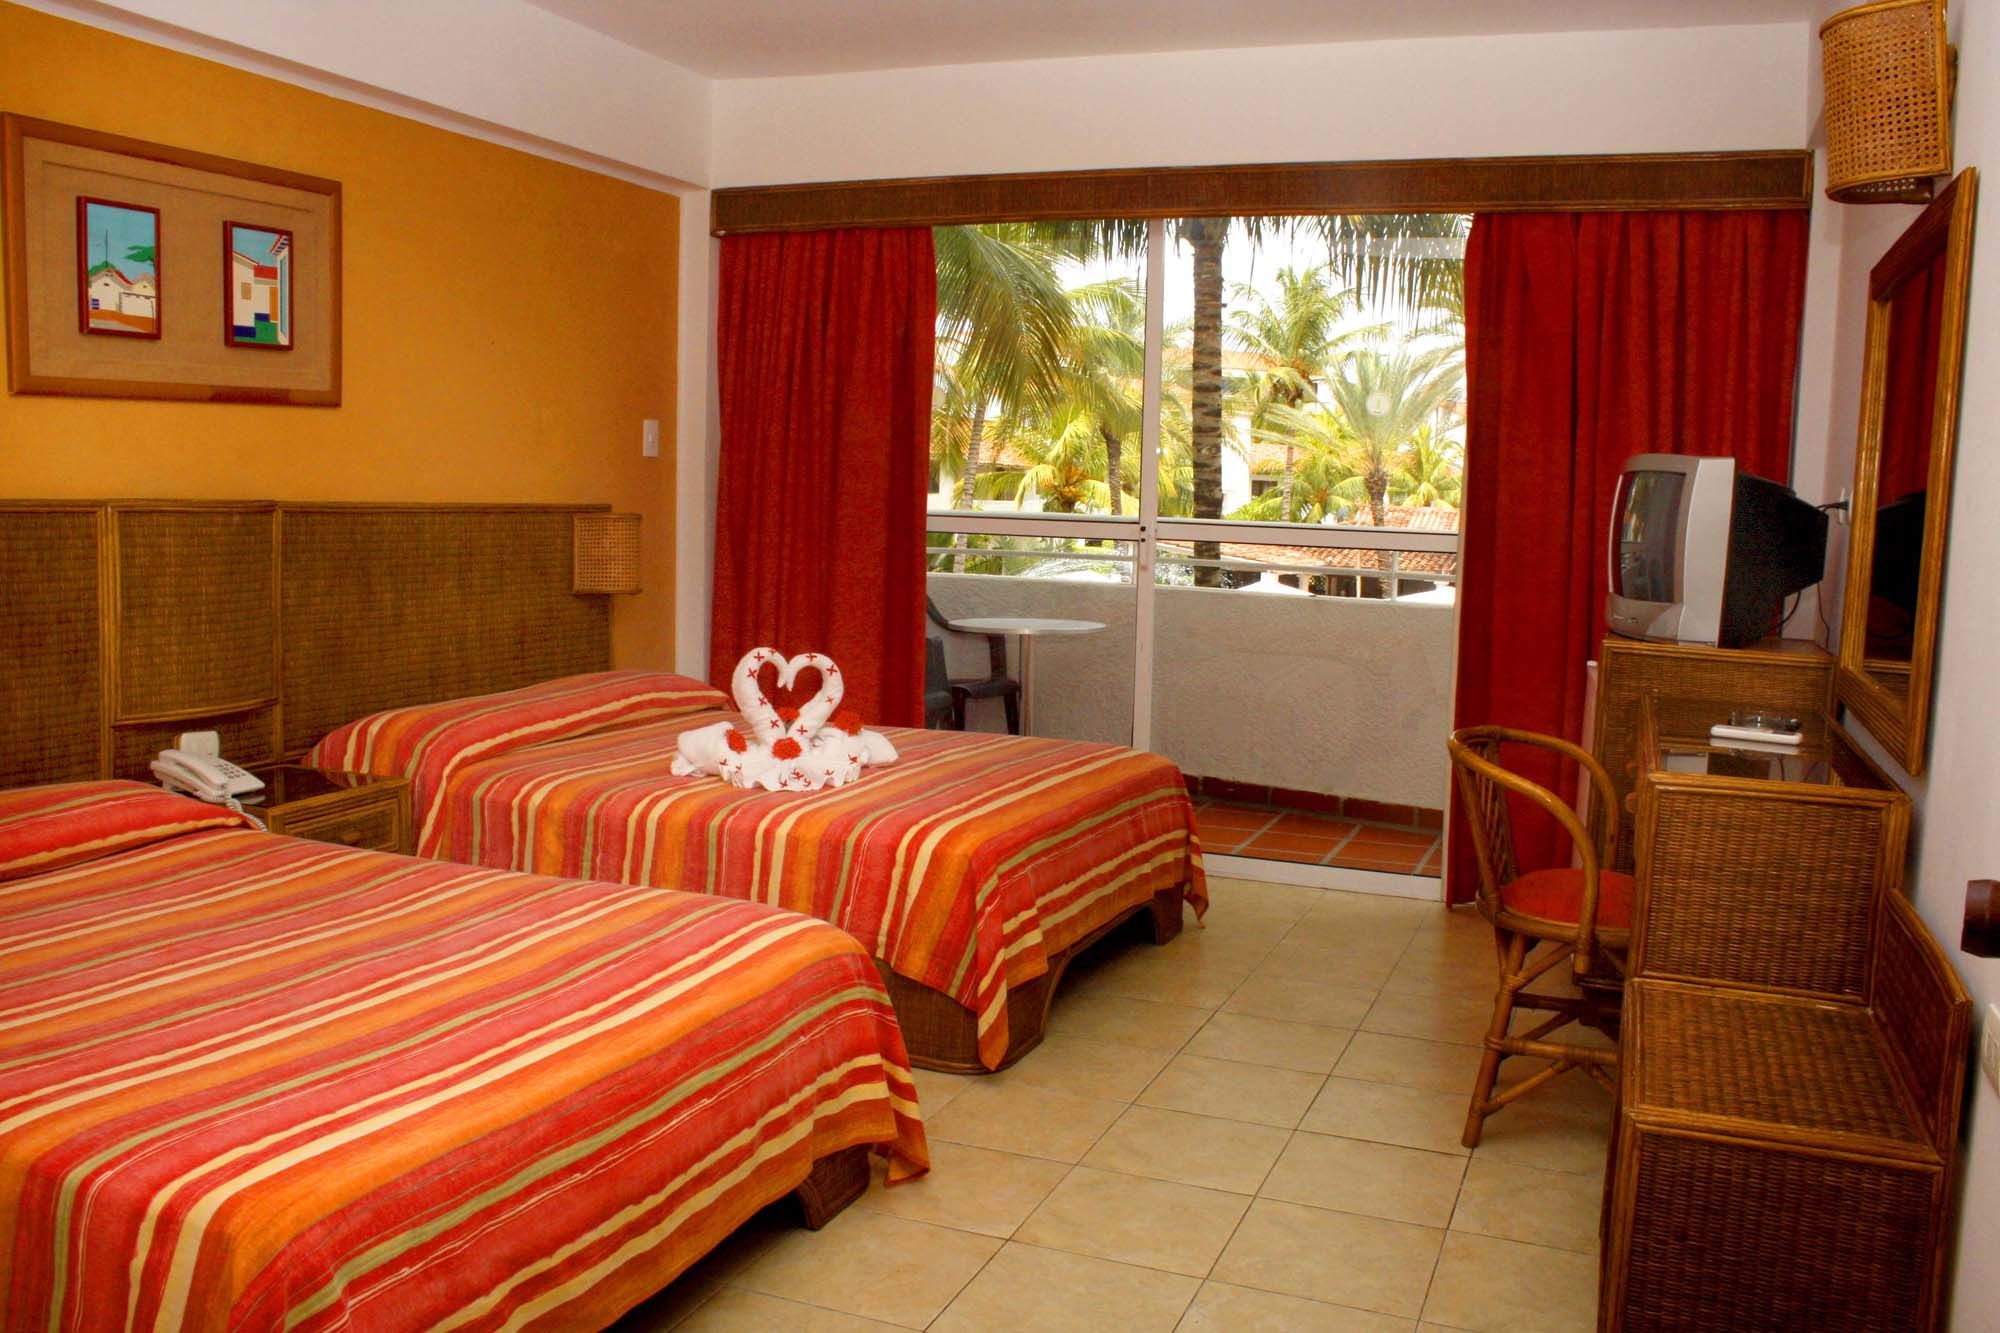 Costa caribe beach hotel 3. Отель SUNSOL Ecoland Hotel & Resort. Costa Caribe Beach Hotel Resort 3 Венесуэла. SUNSOL Ecoland Hotel Resort 4 Венесуэла.